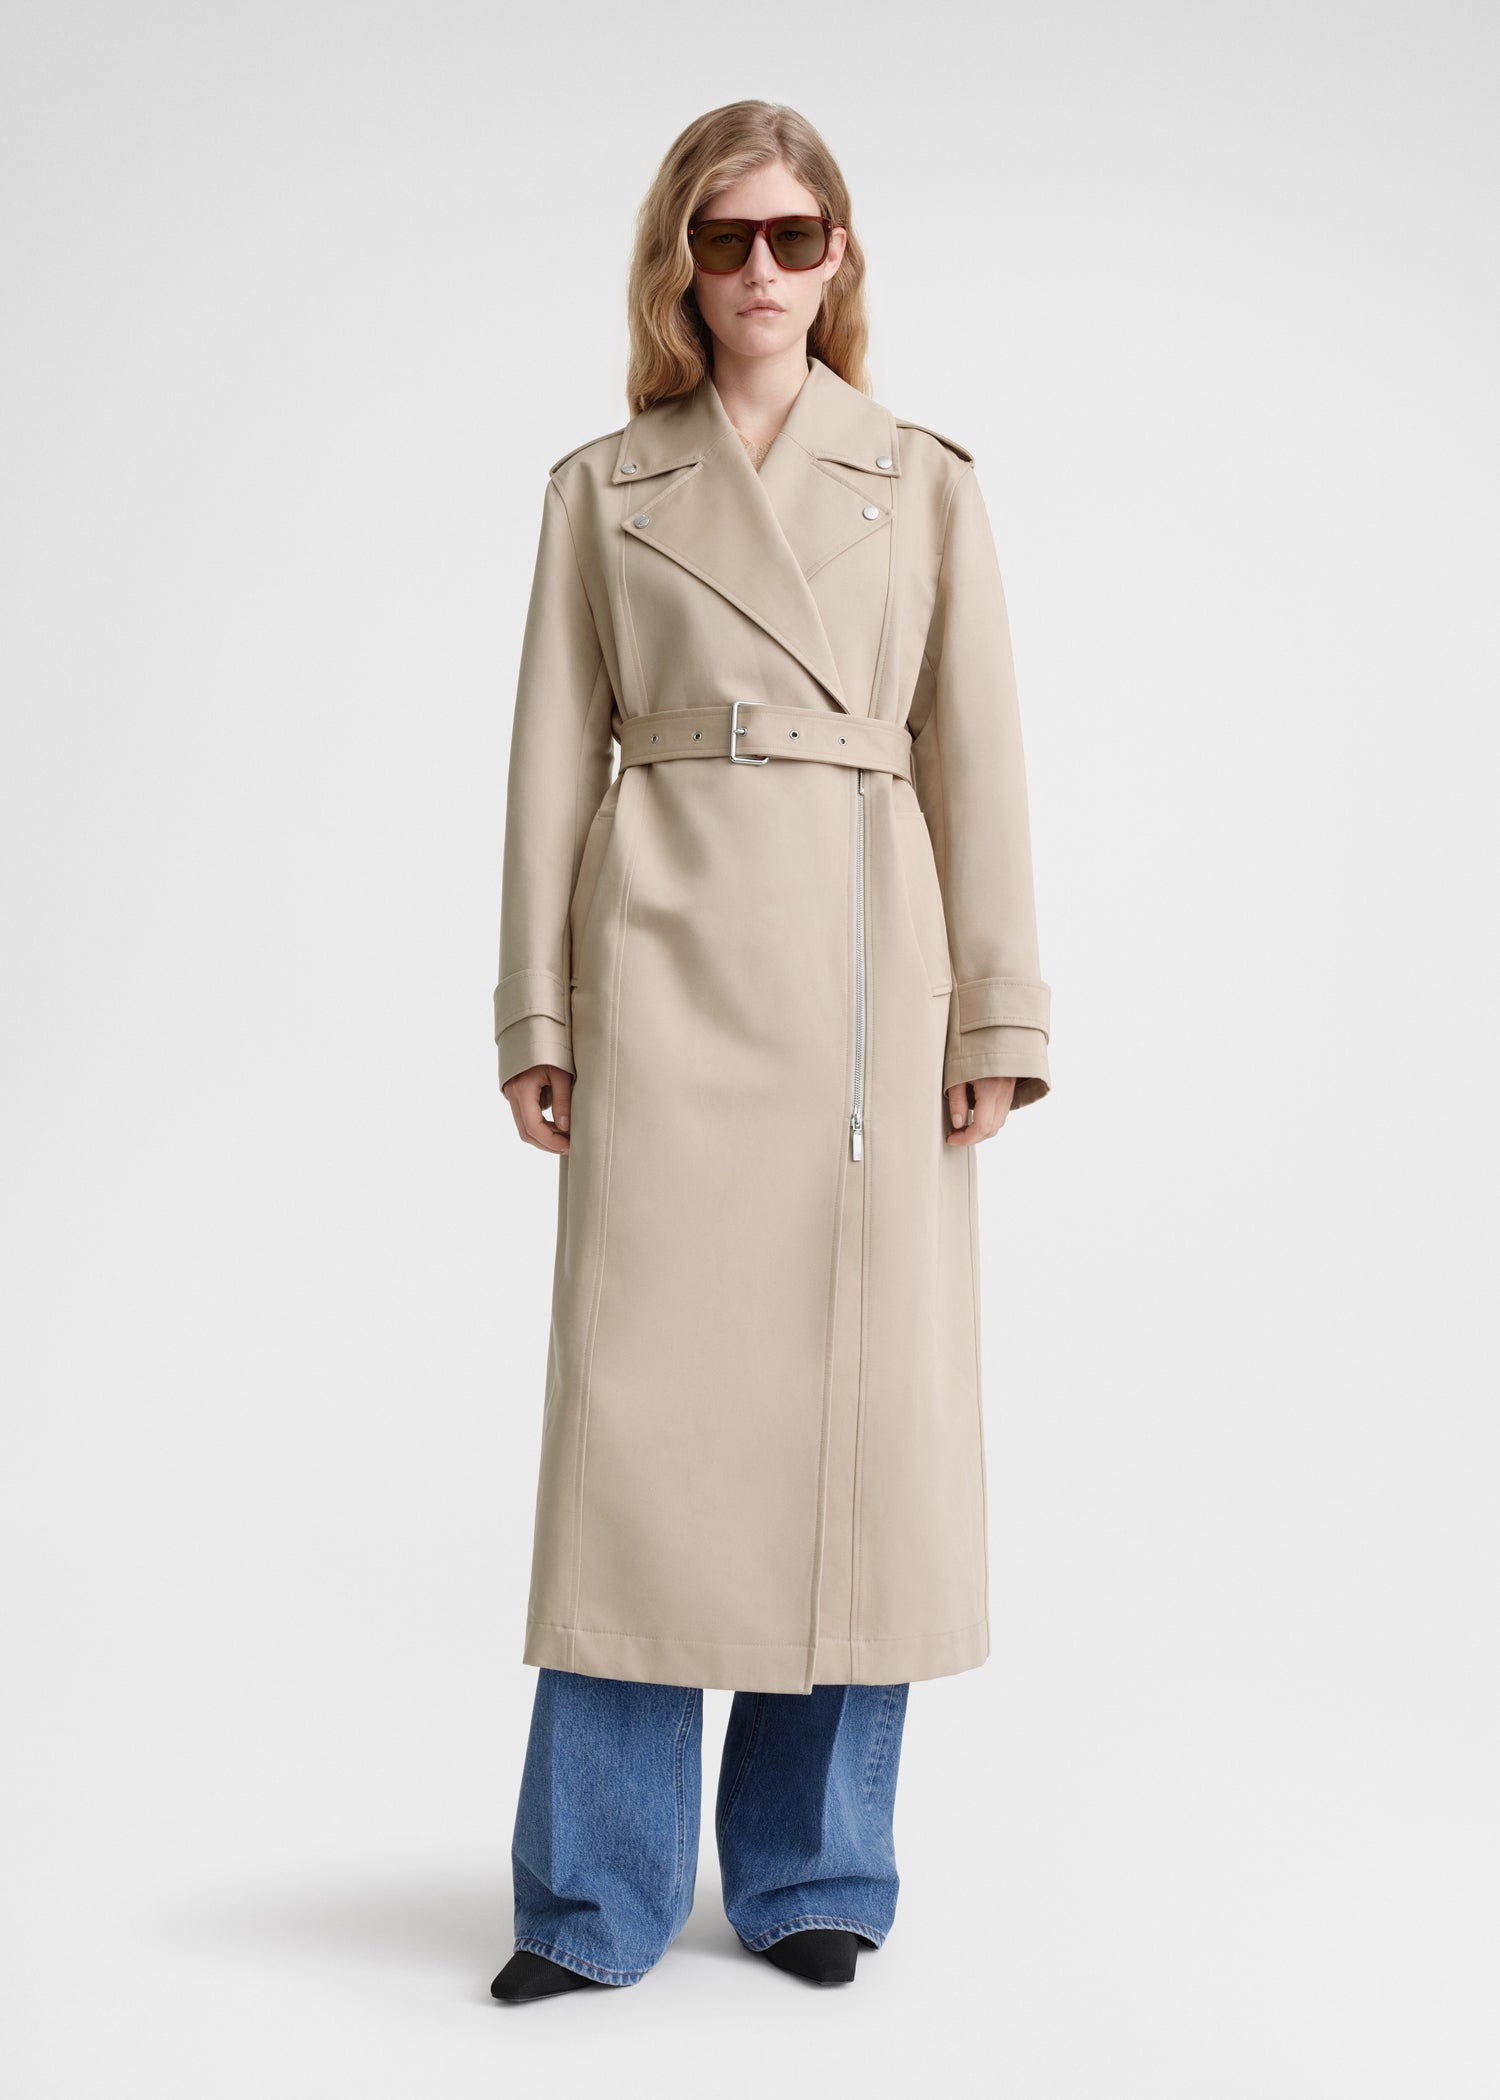 Women's Designer Coats & Jackets – TOTEME